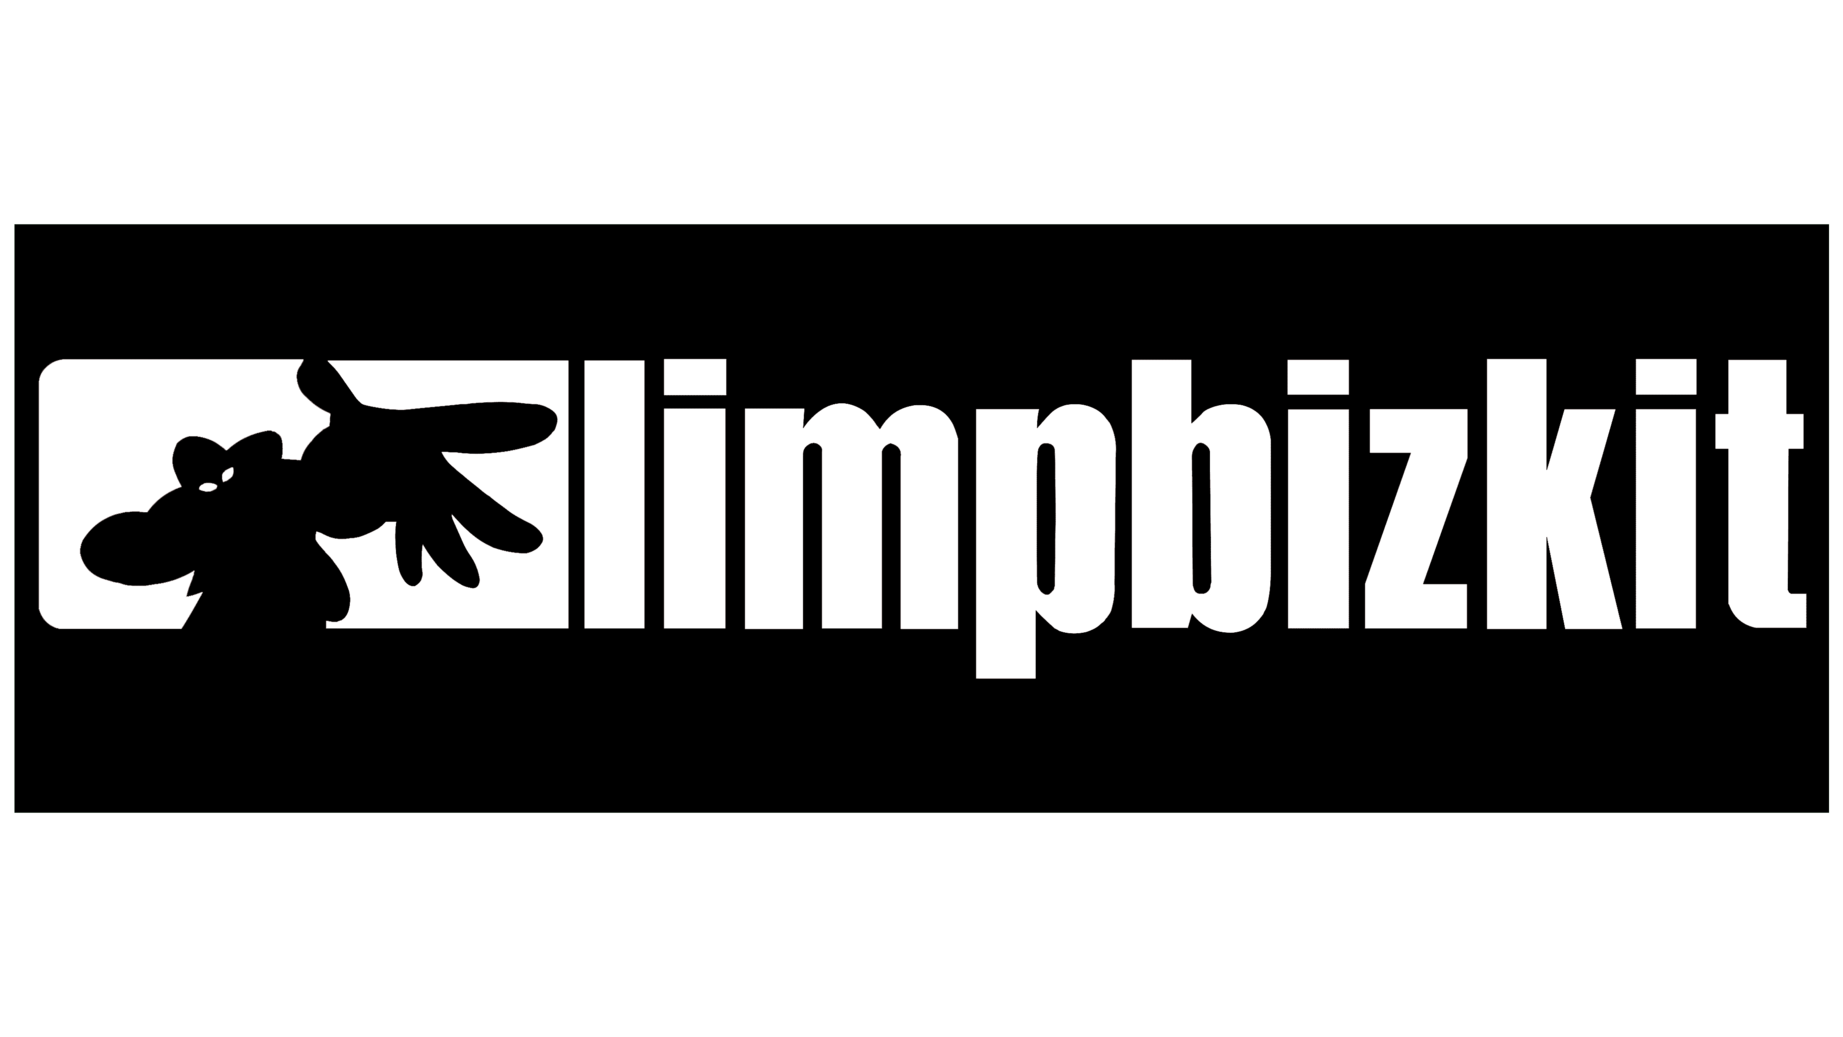 Limp bizkit logo